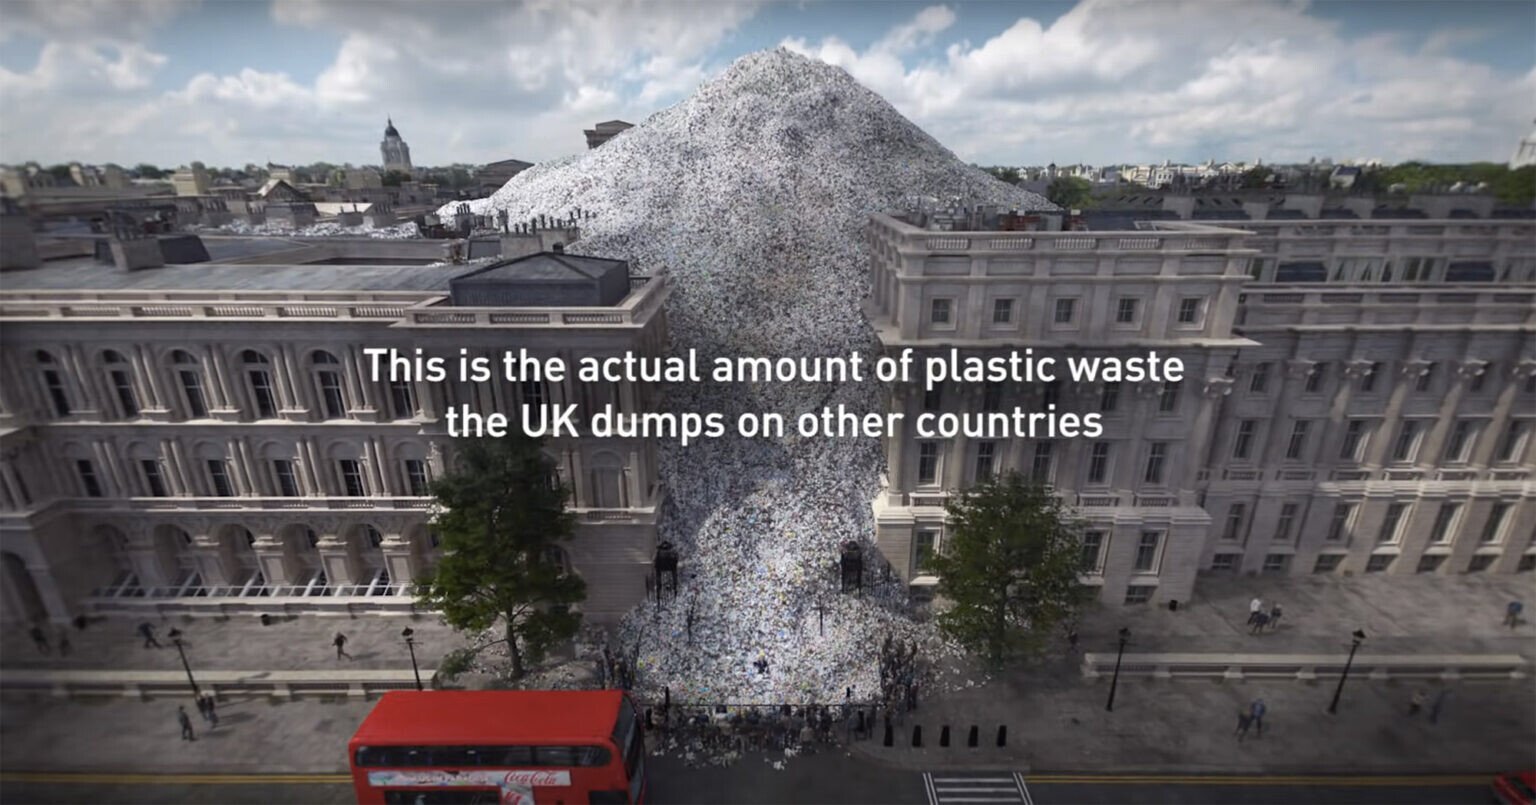 wasteminster greenpeace cortometraje animacion ecologia sostenibilidad 2